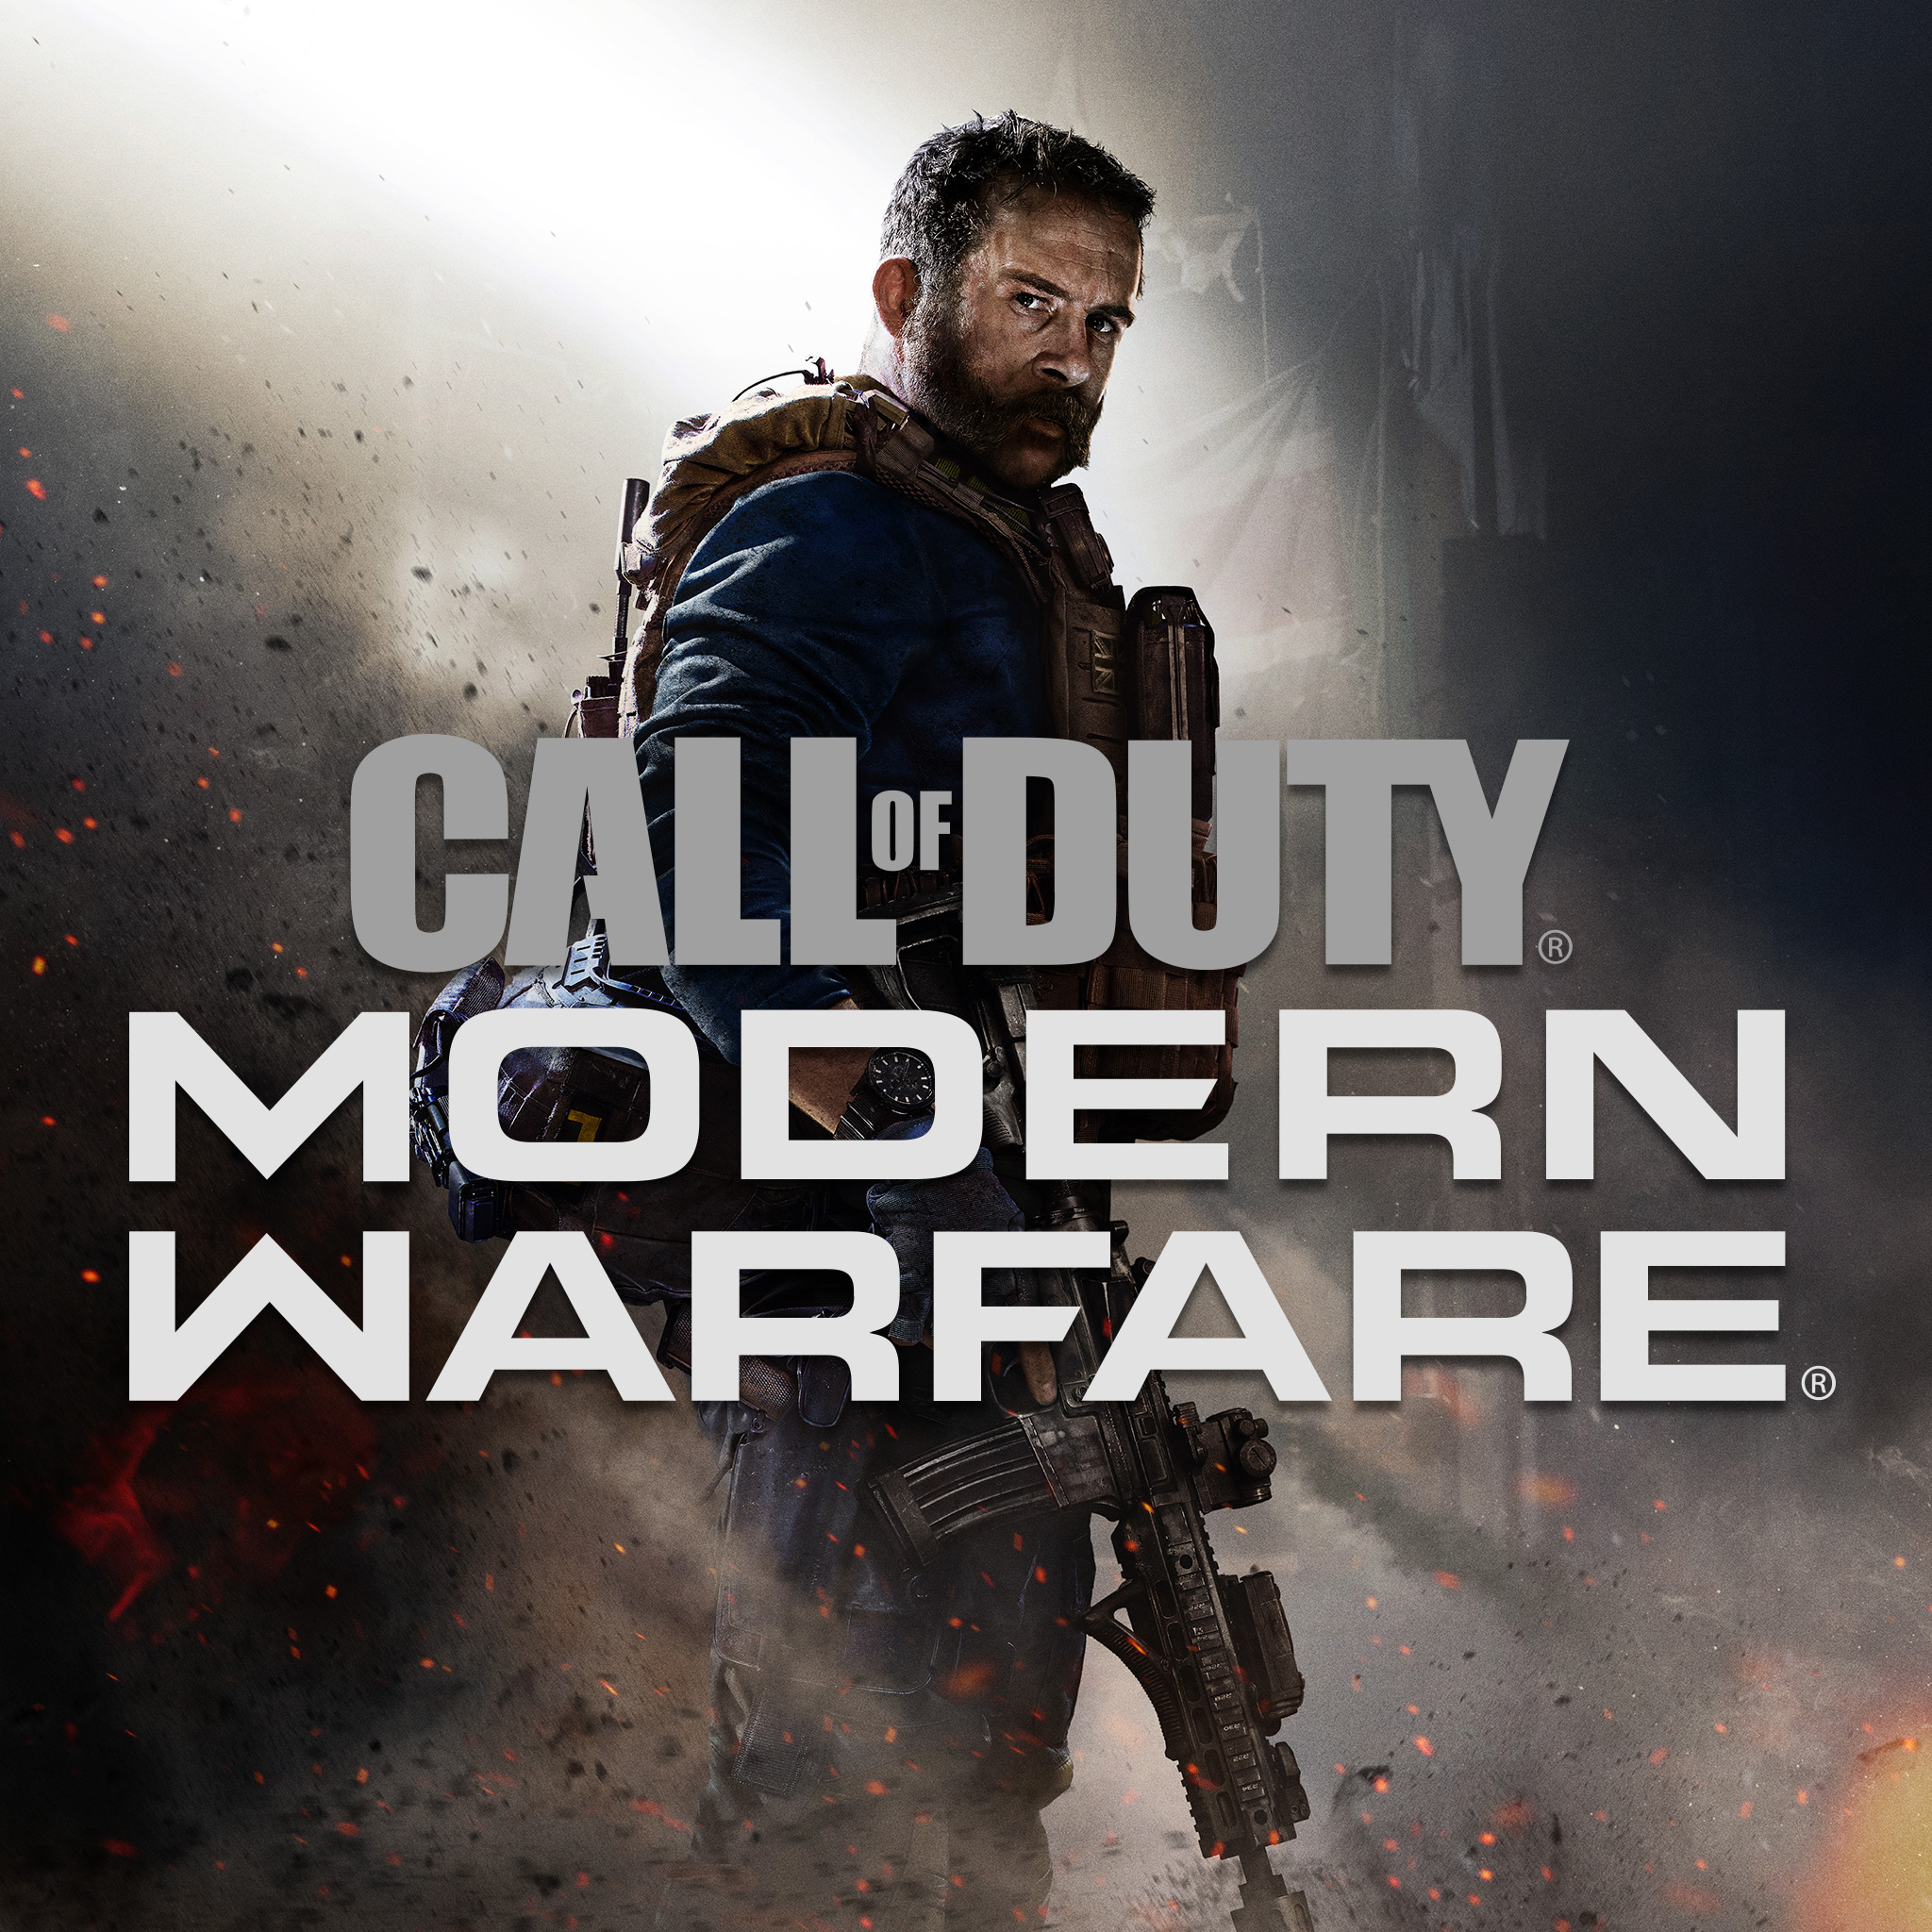 Call of Duty®: Modern Warfare® PS4 Price & Sale History ...